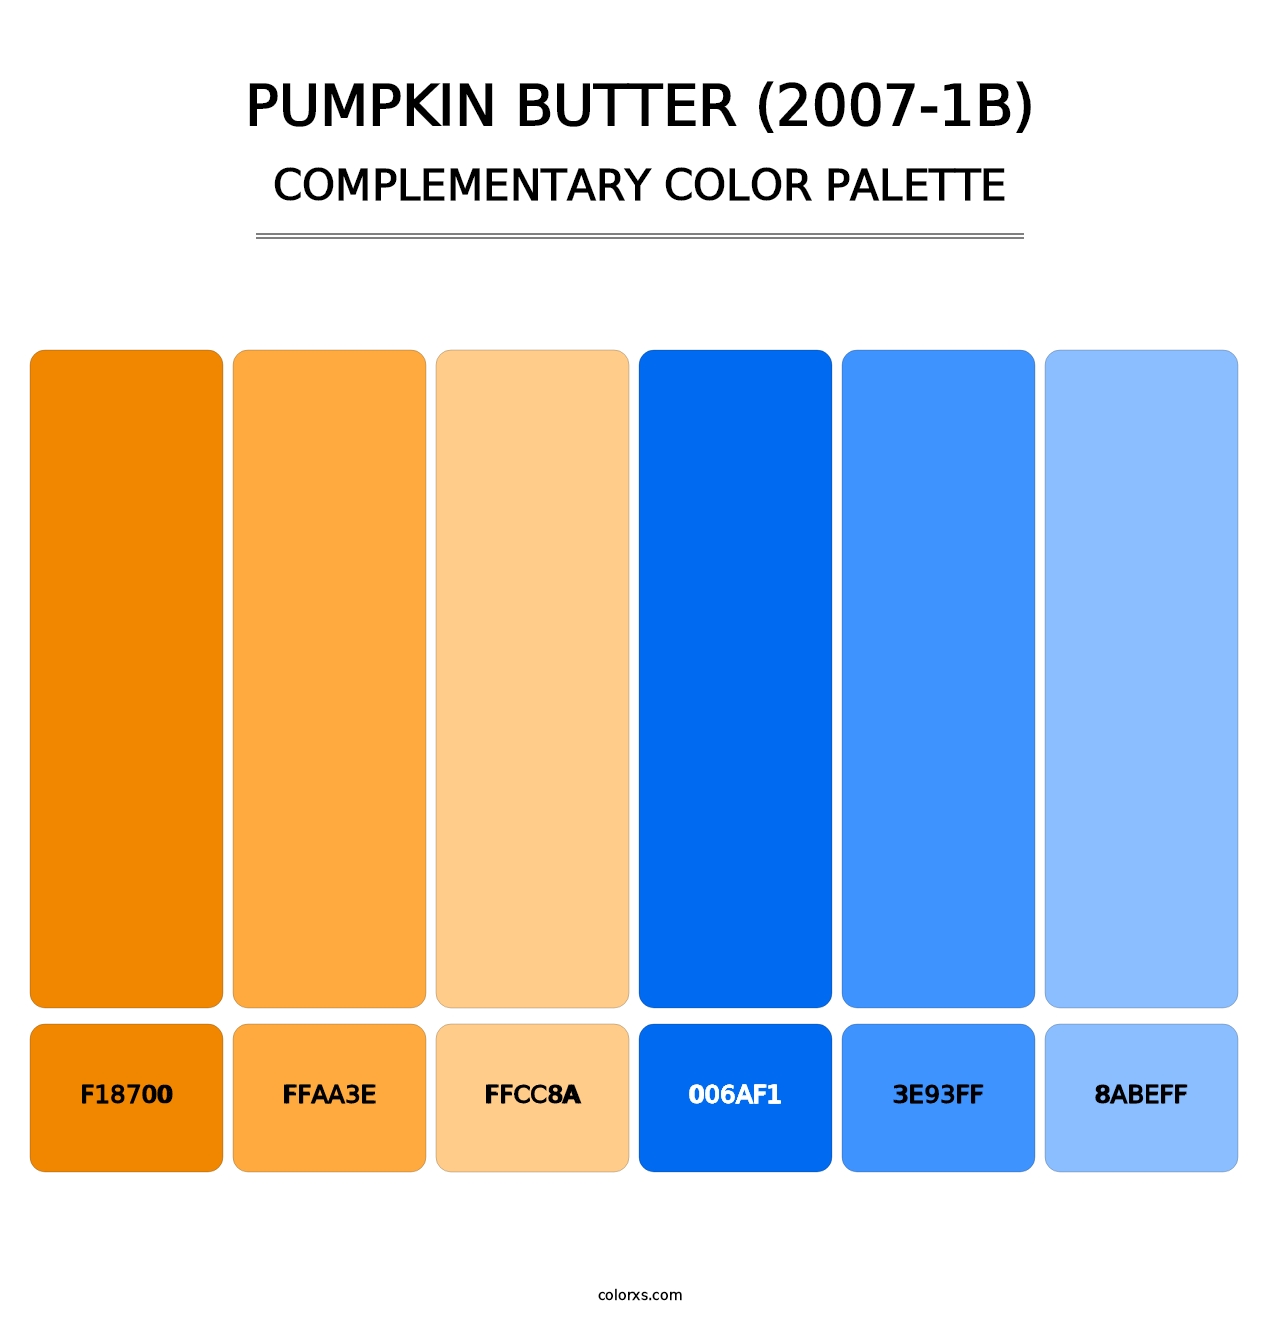 Pumpkin Butter (2007-1B) - Complementary Color Palette